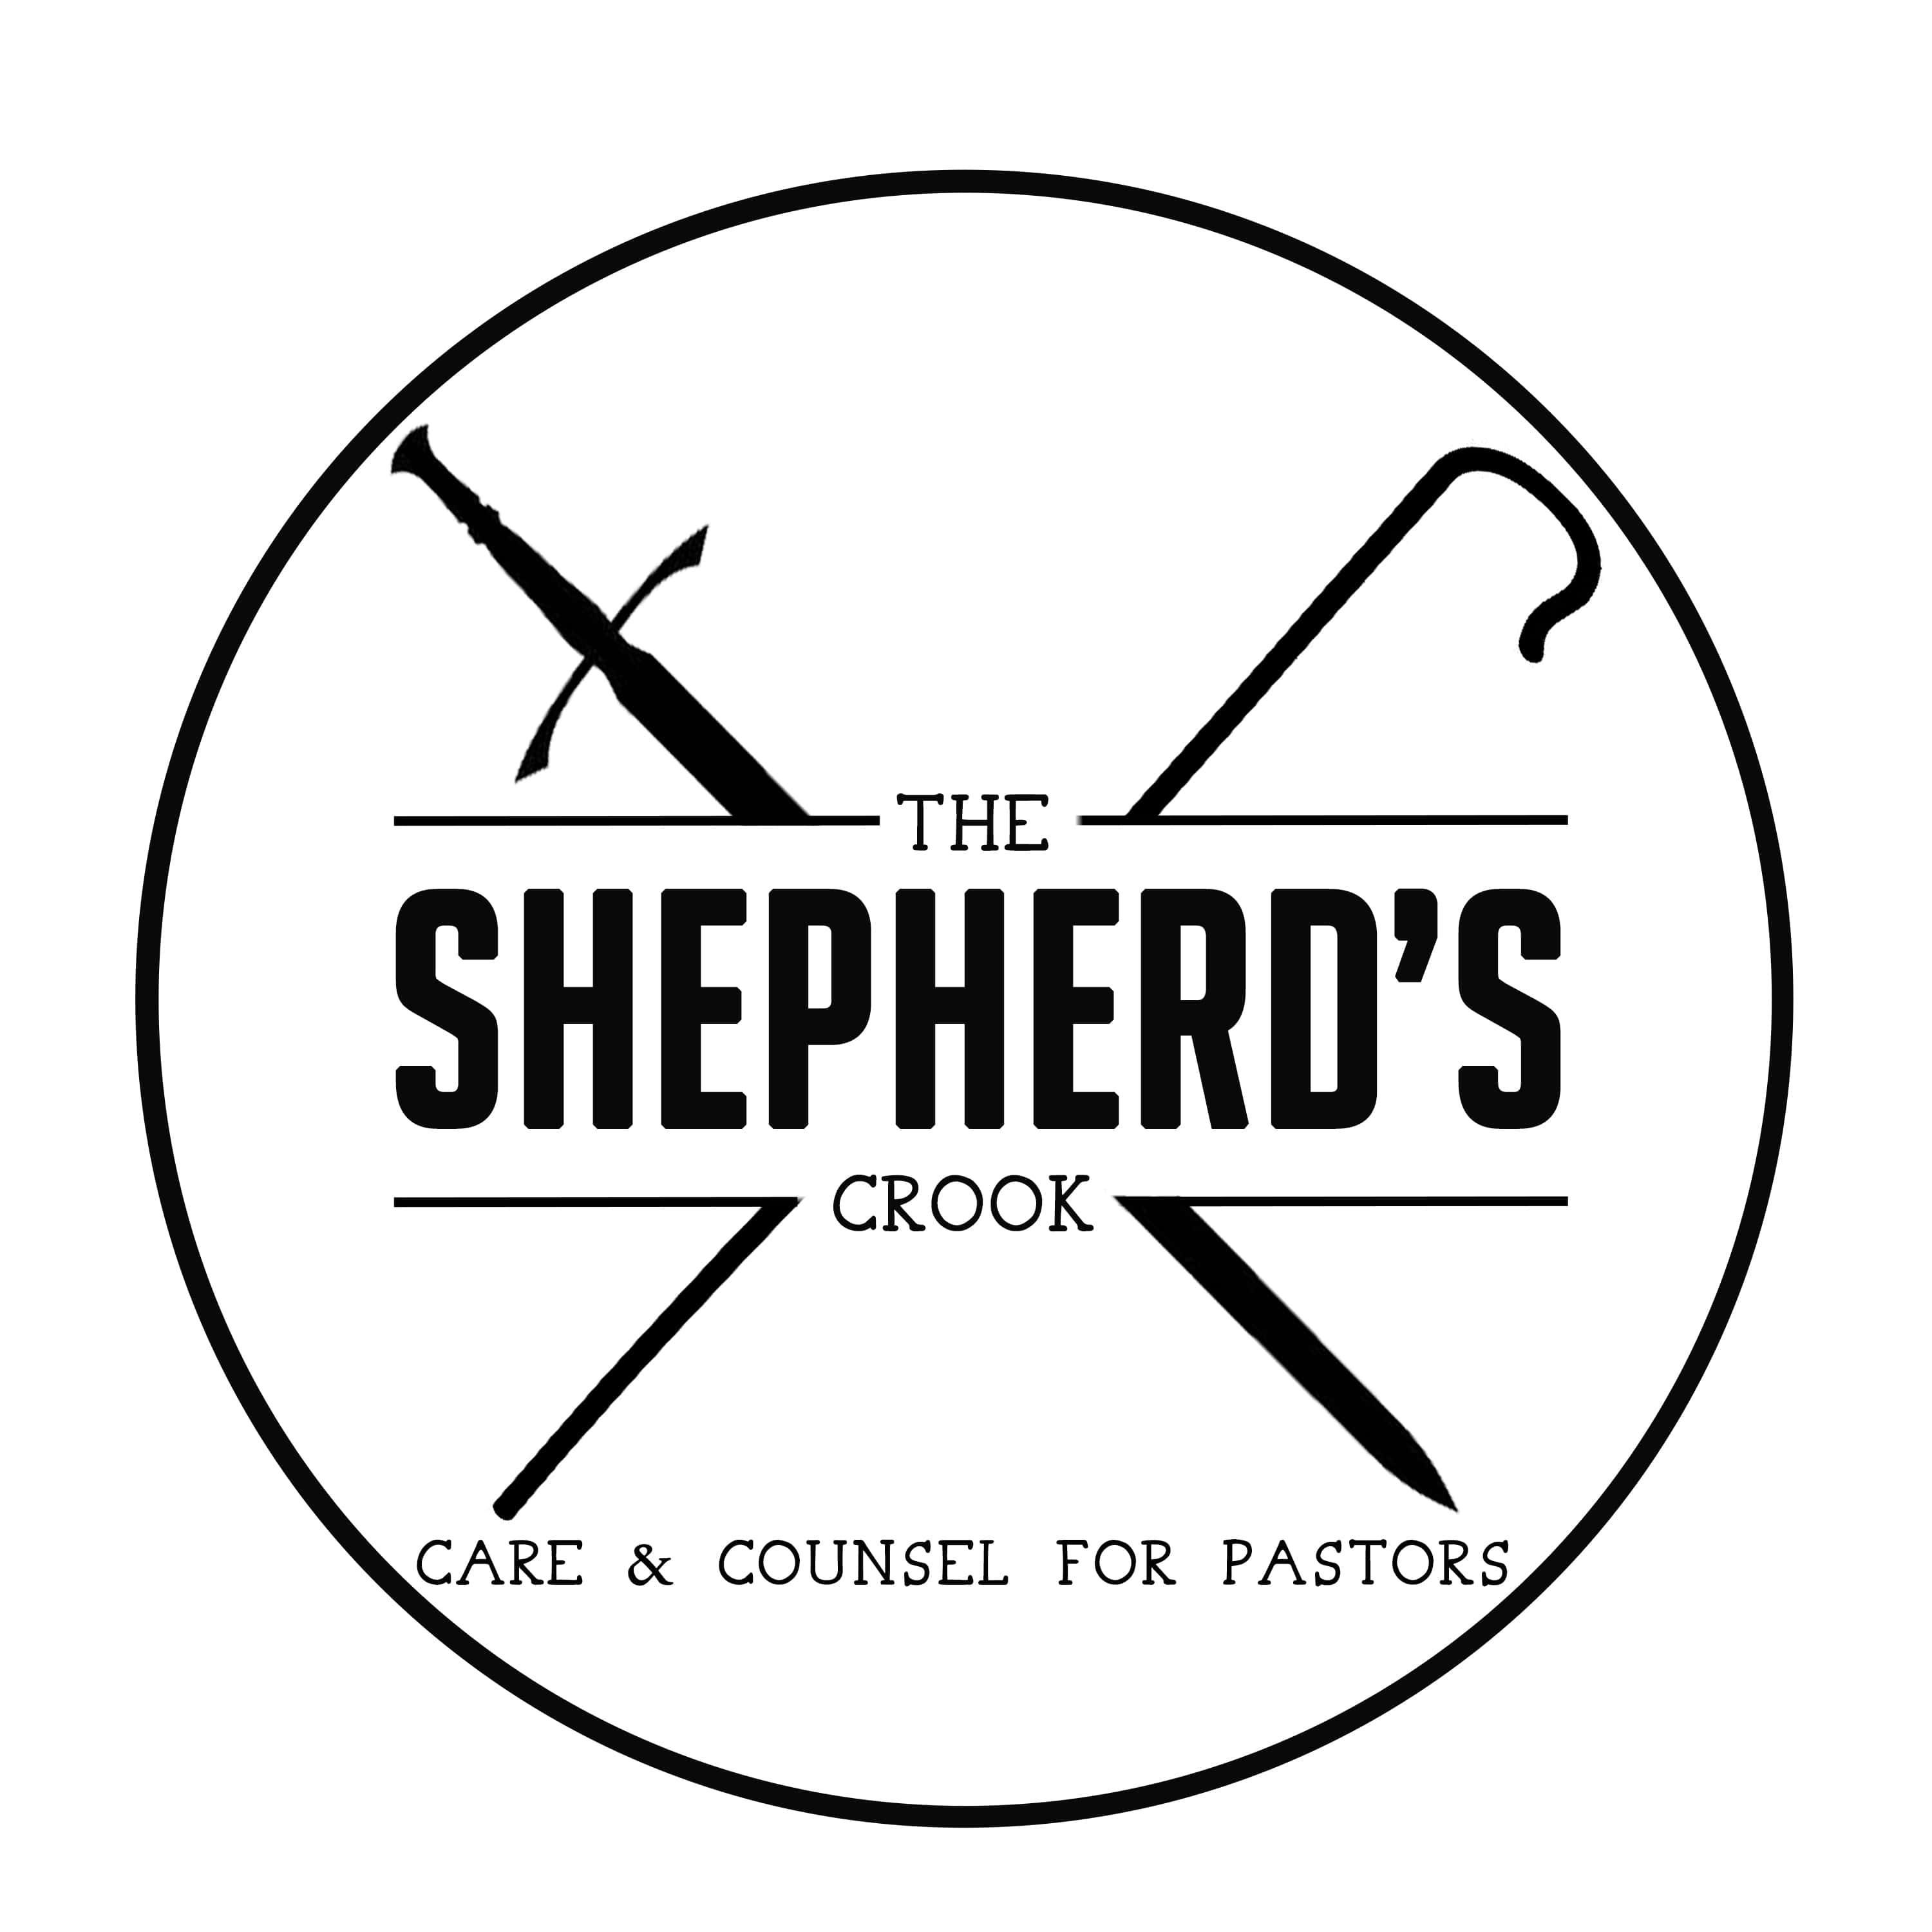 The Shepherd's Crook